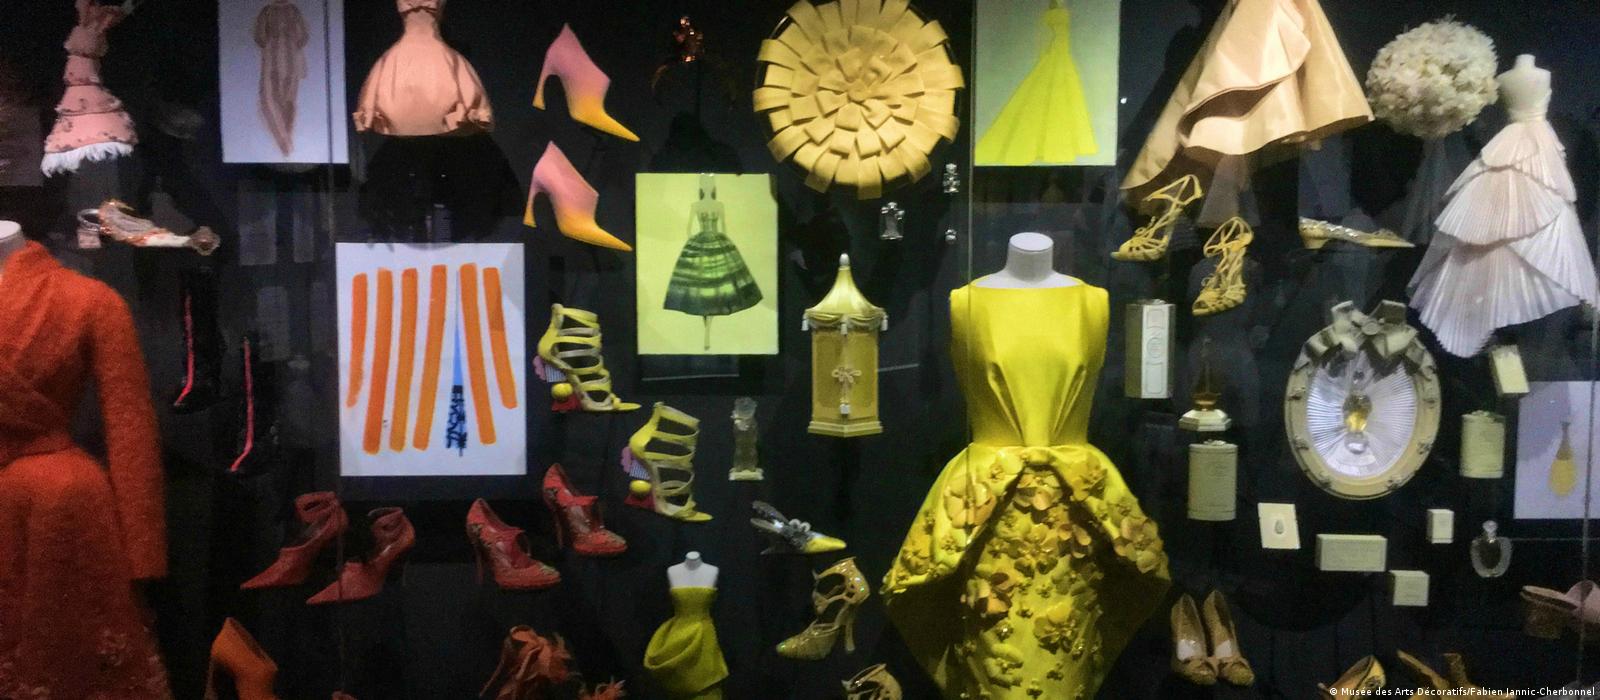 Controversial designer John Galliano's work goes on display in Paris